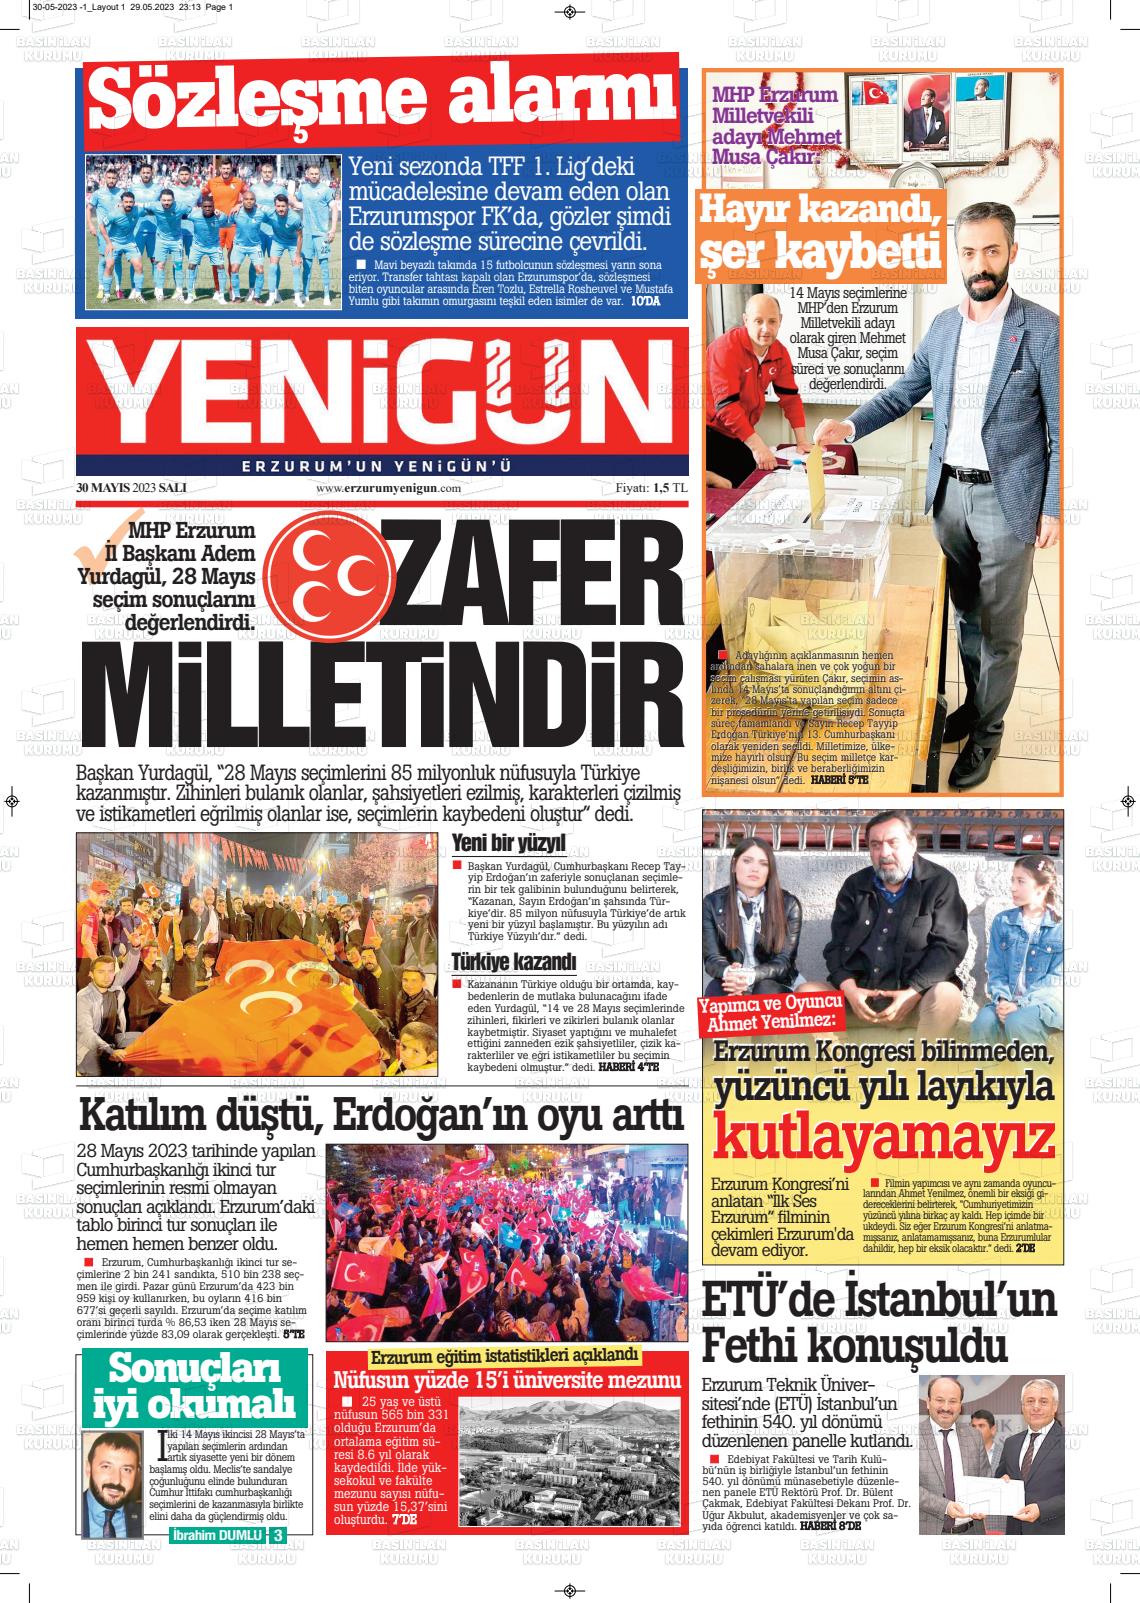 30 Mayıs 2023 Erzurum Yenigün Gazete Manşeti